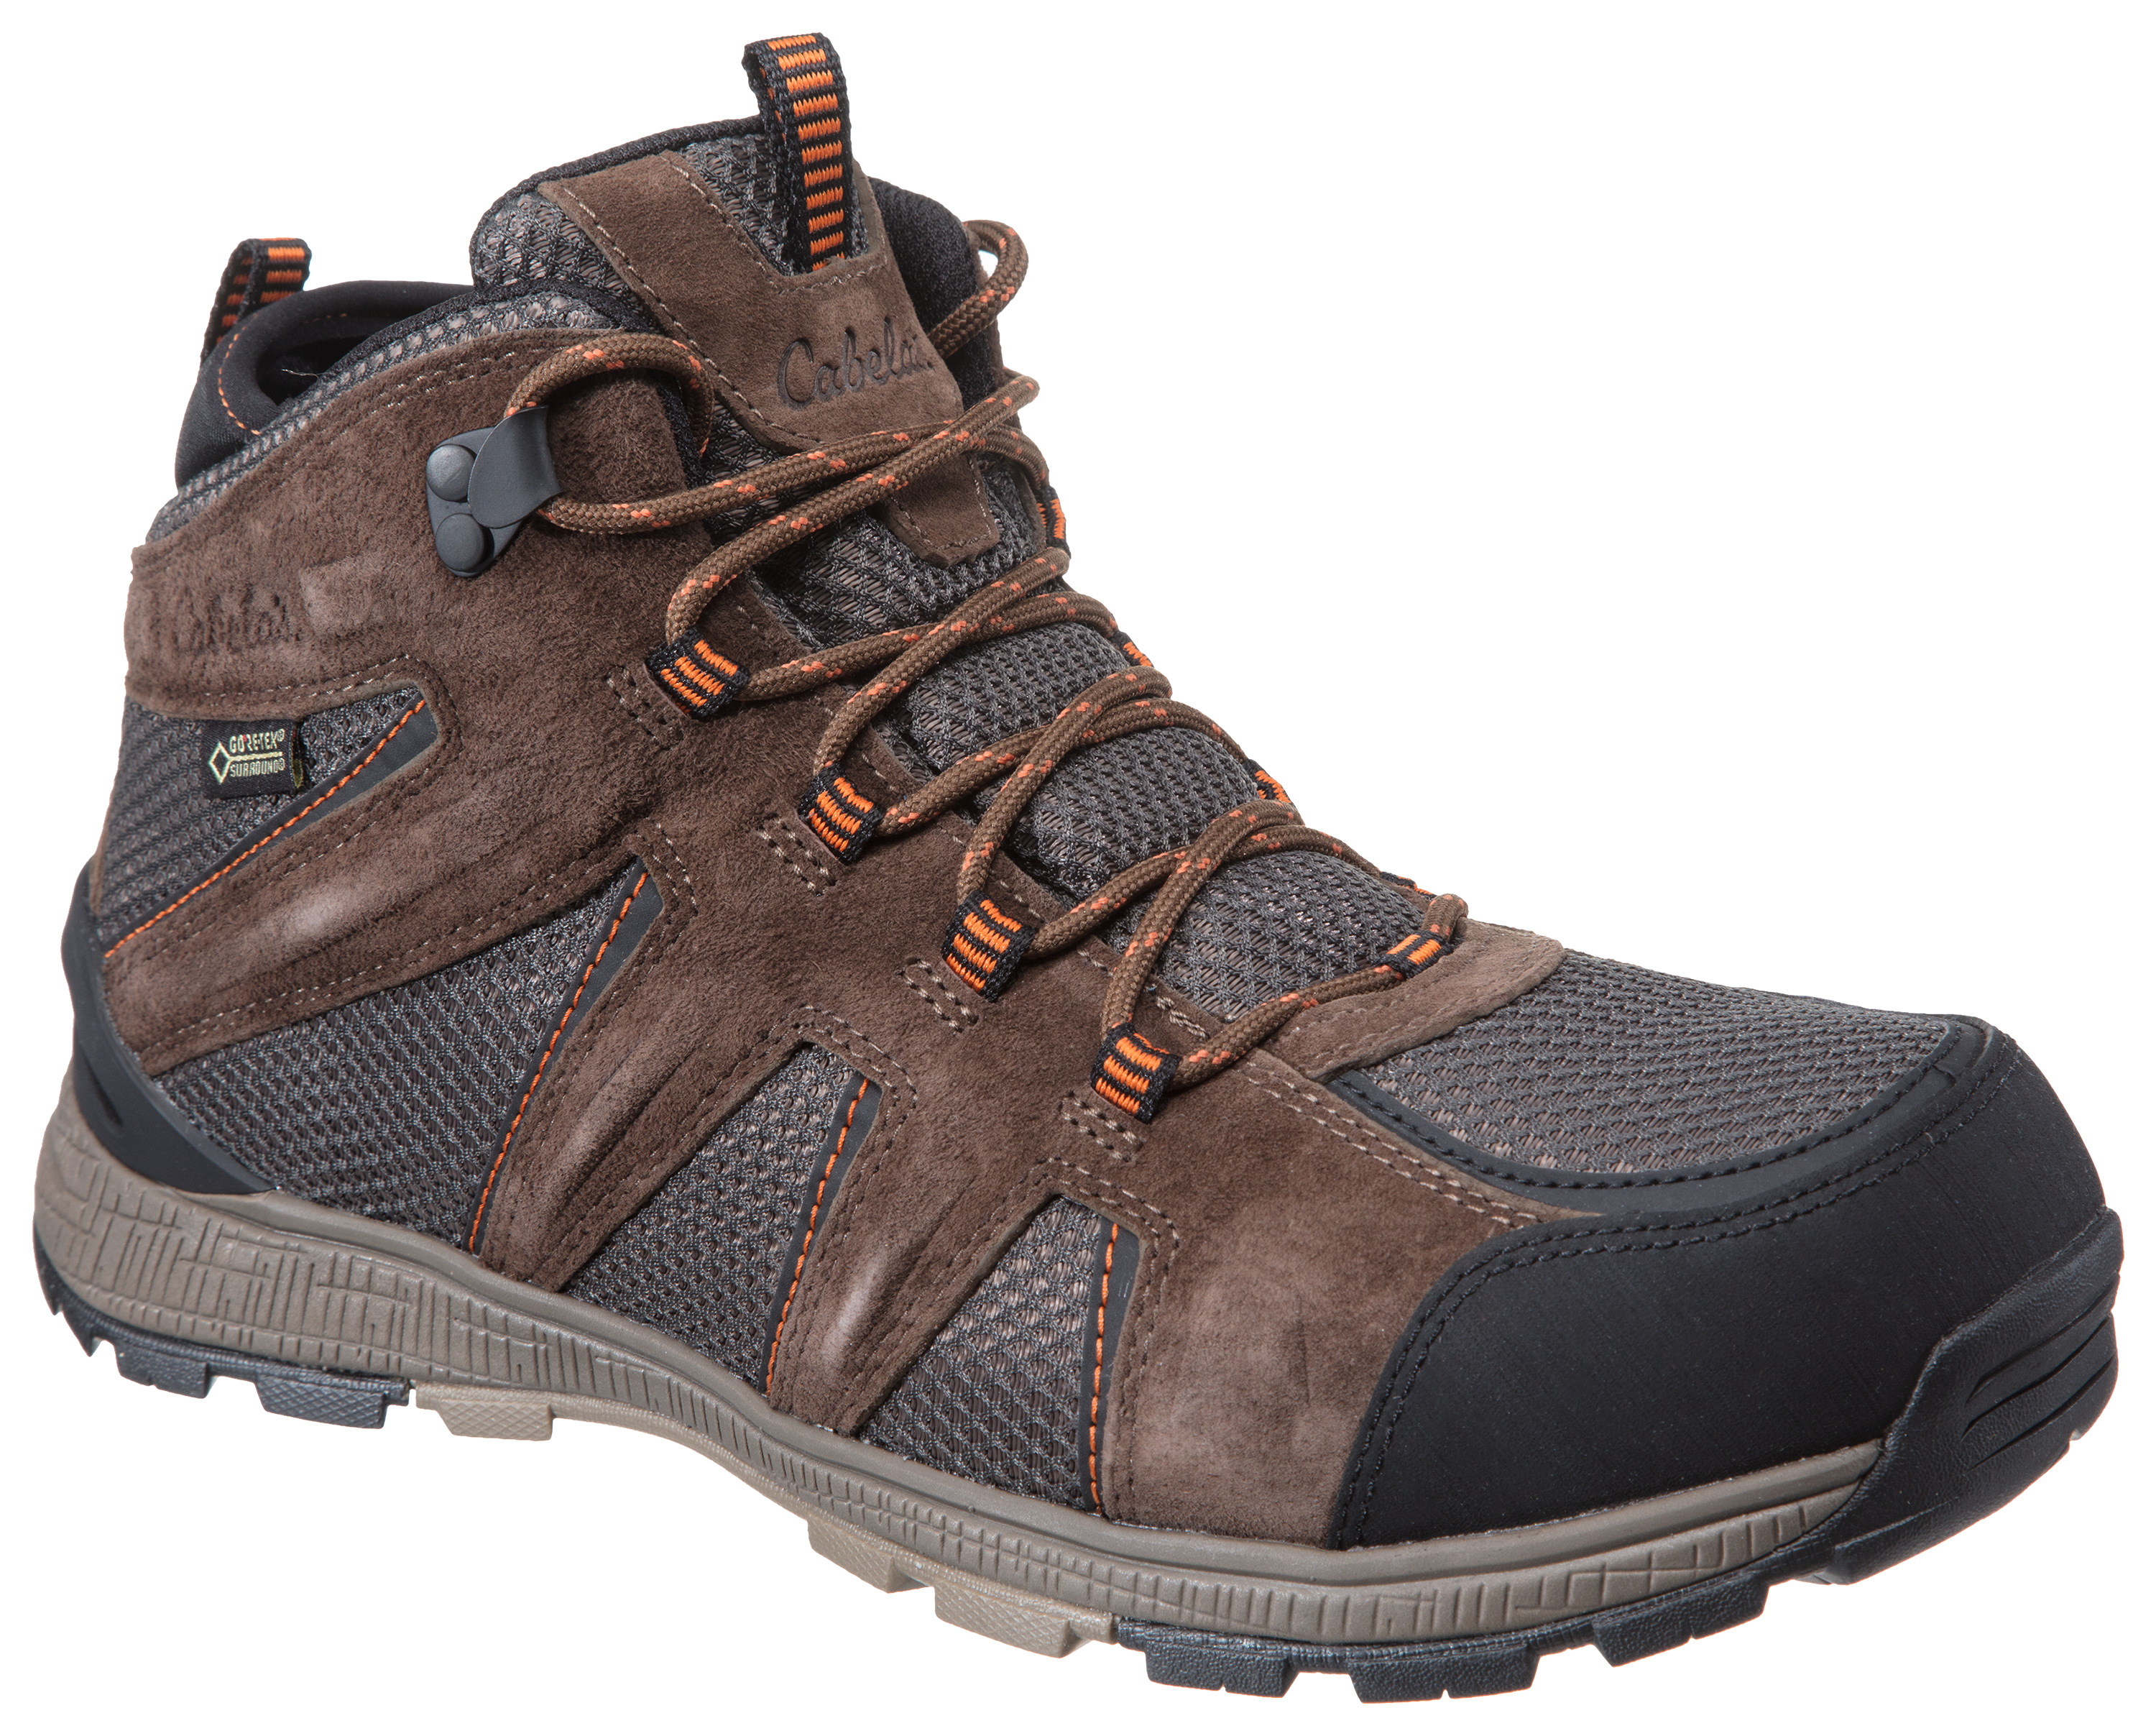 Cabela's 360 Mid GORE-TEX Hiking Boots for Men - Teak - 14M